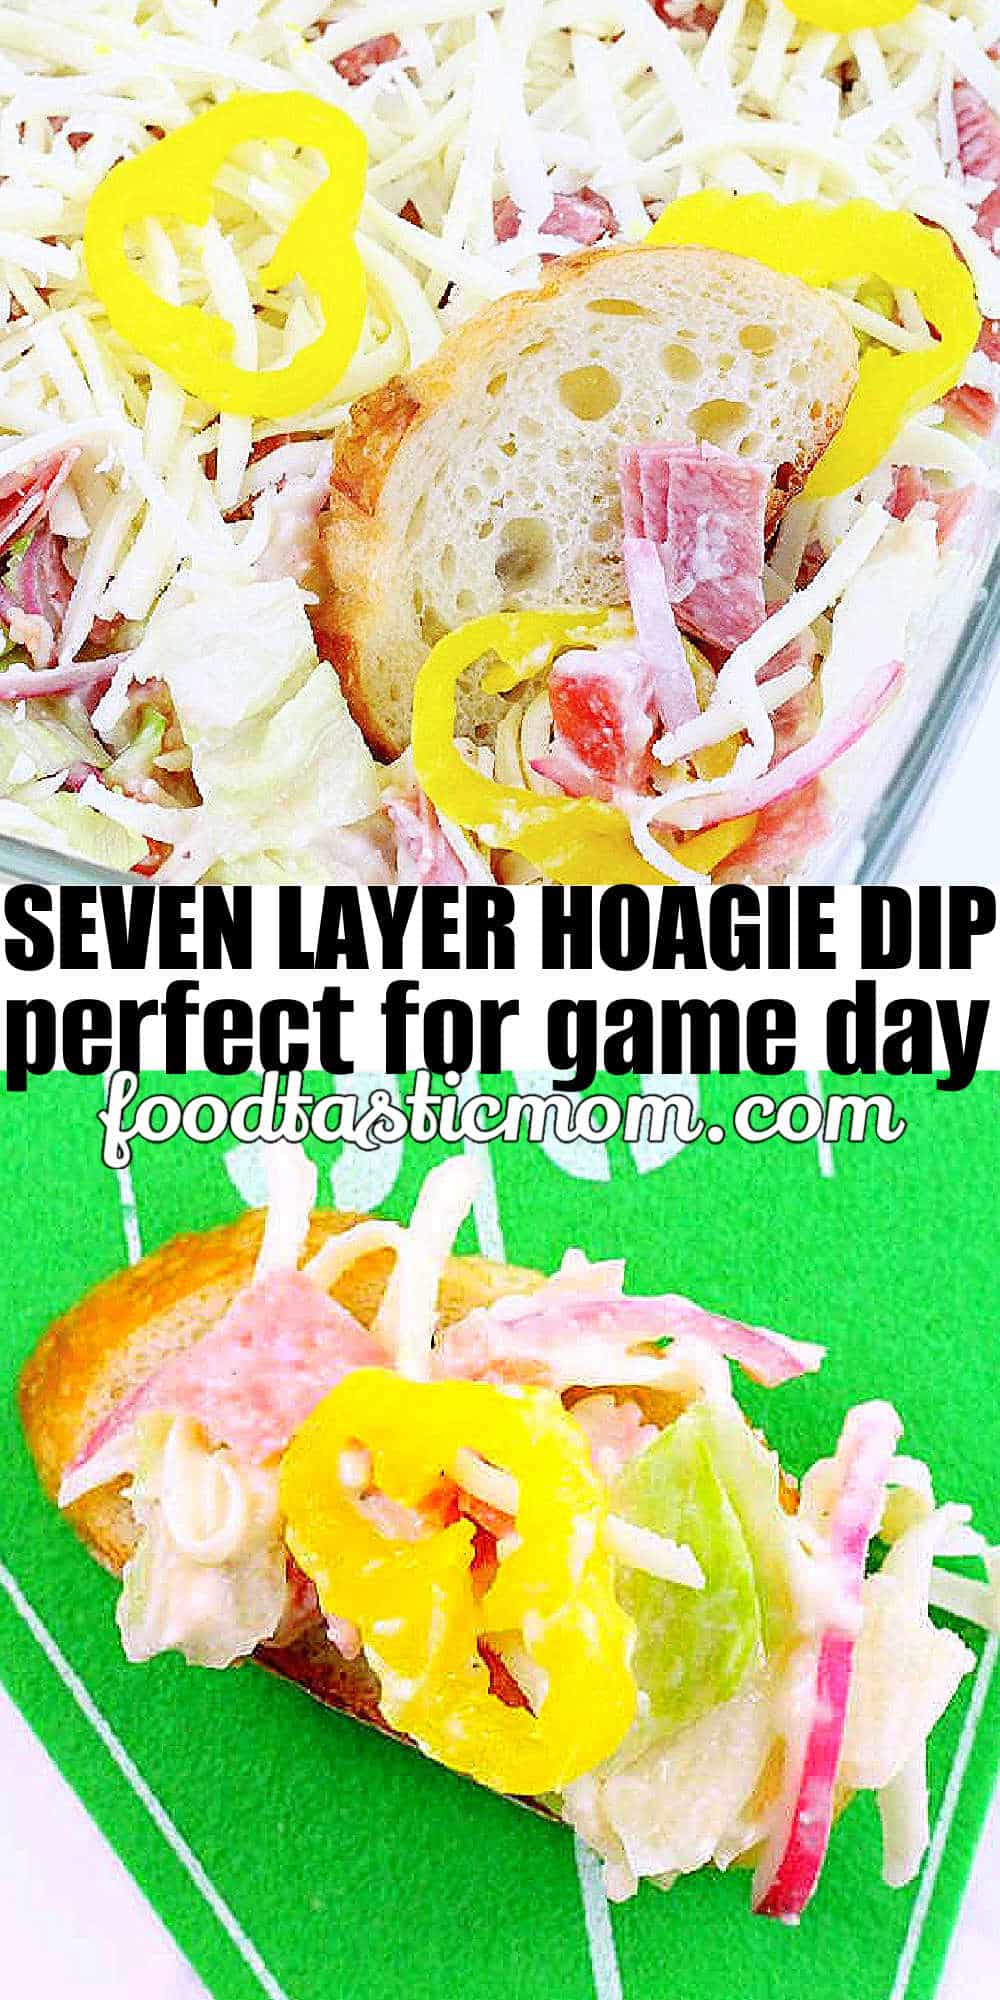 Seven Layer Hoagie Dip | Foodtastic Mom #sevenlayerdip #hoagierecipe #gameday via @foodtasticmom